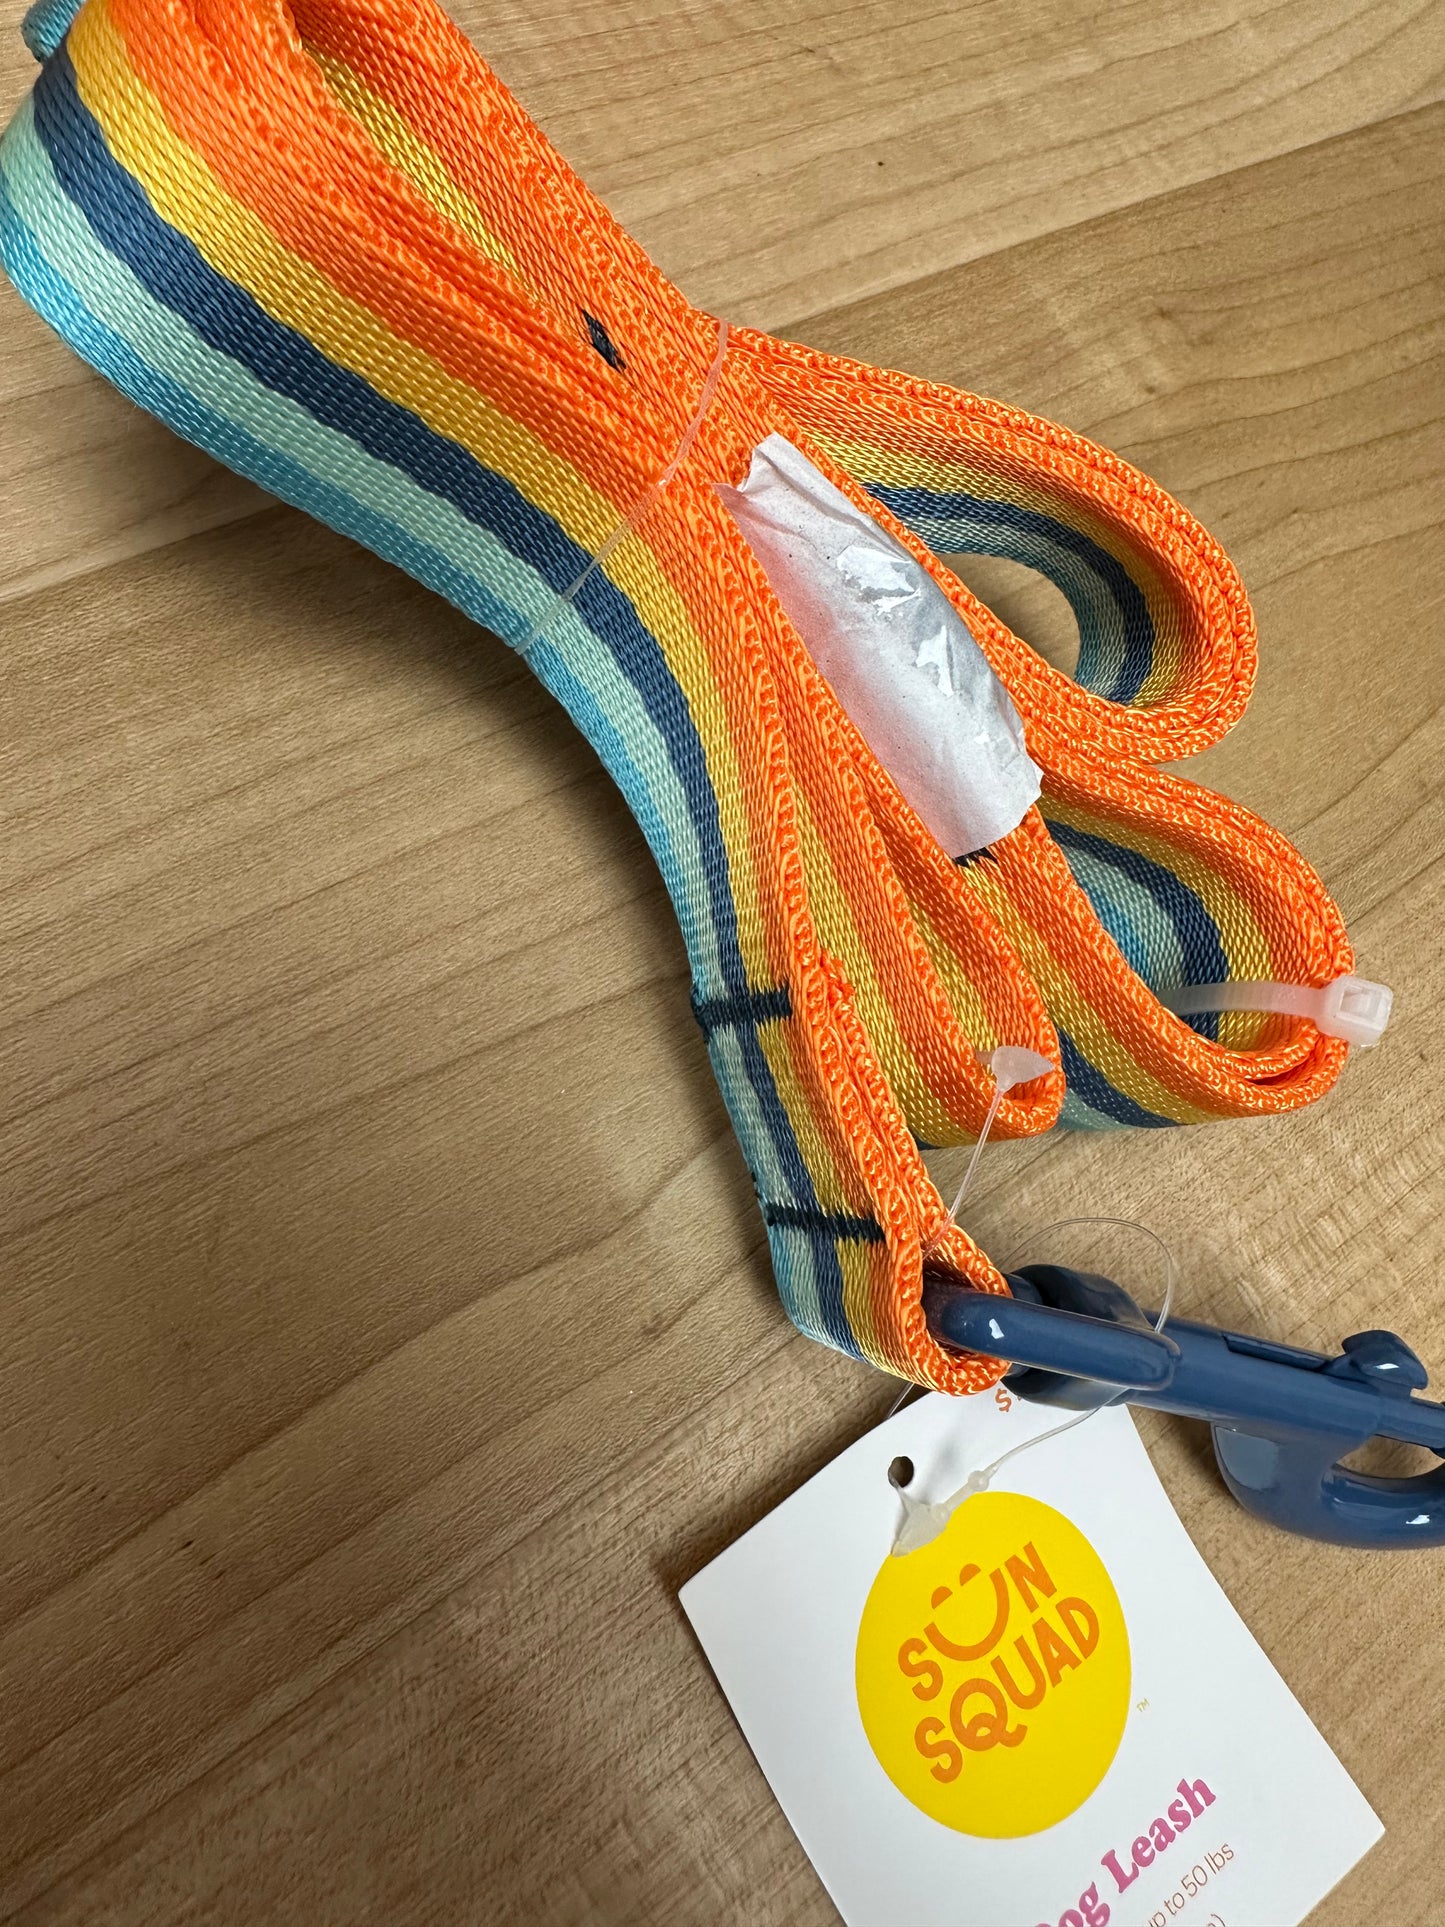 Sun Squad multicolored Dog Leash 5’ long